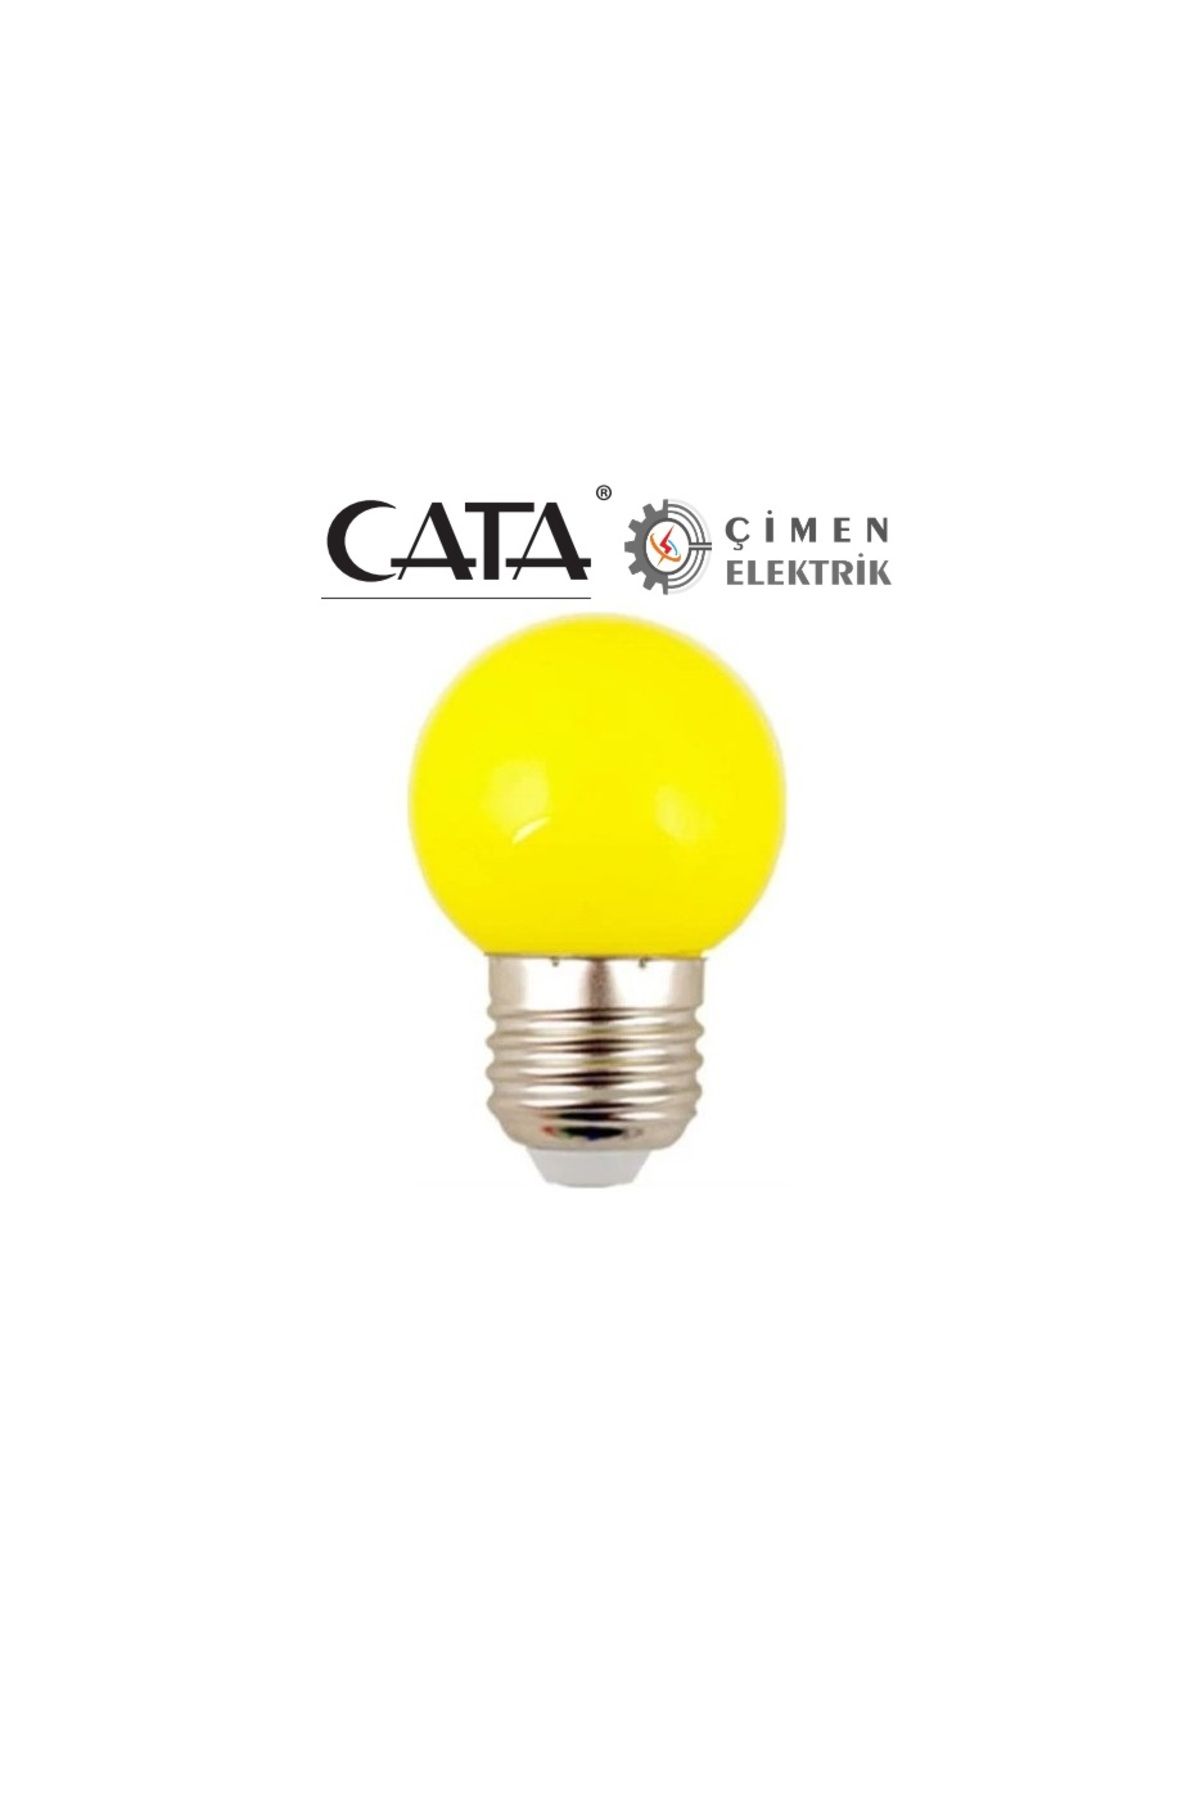 Cata Ct 4071 1w Led Gece Ampul Sarı